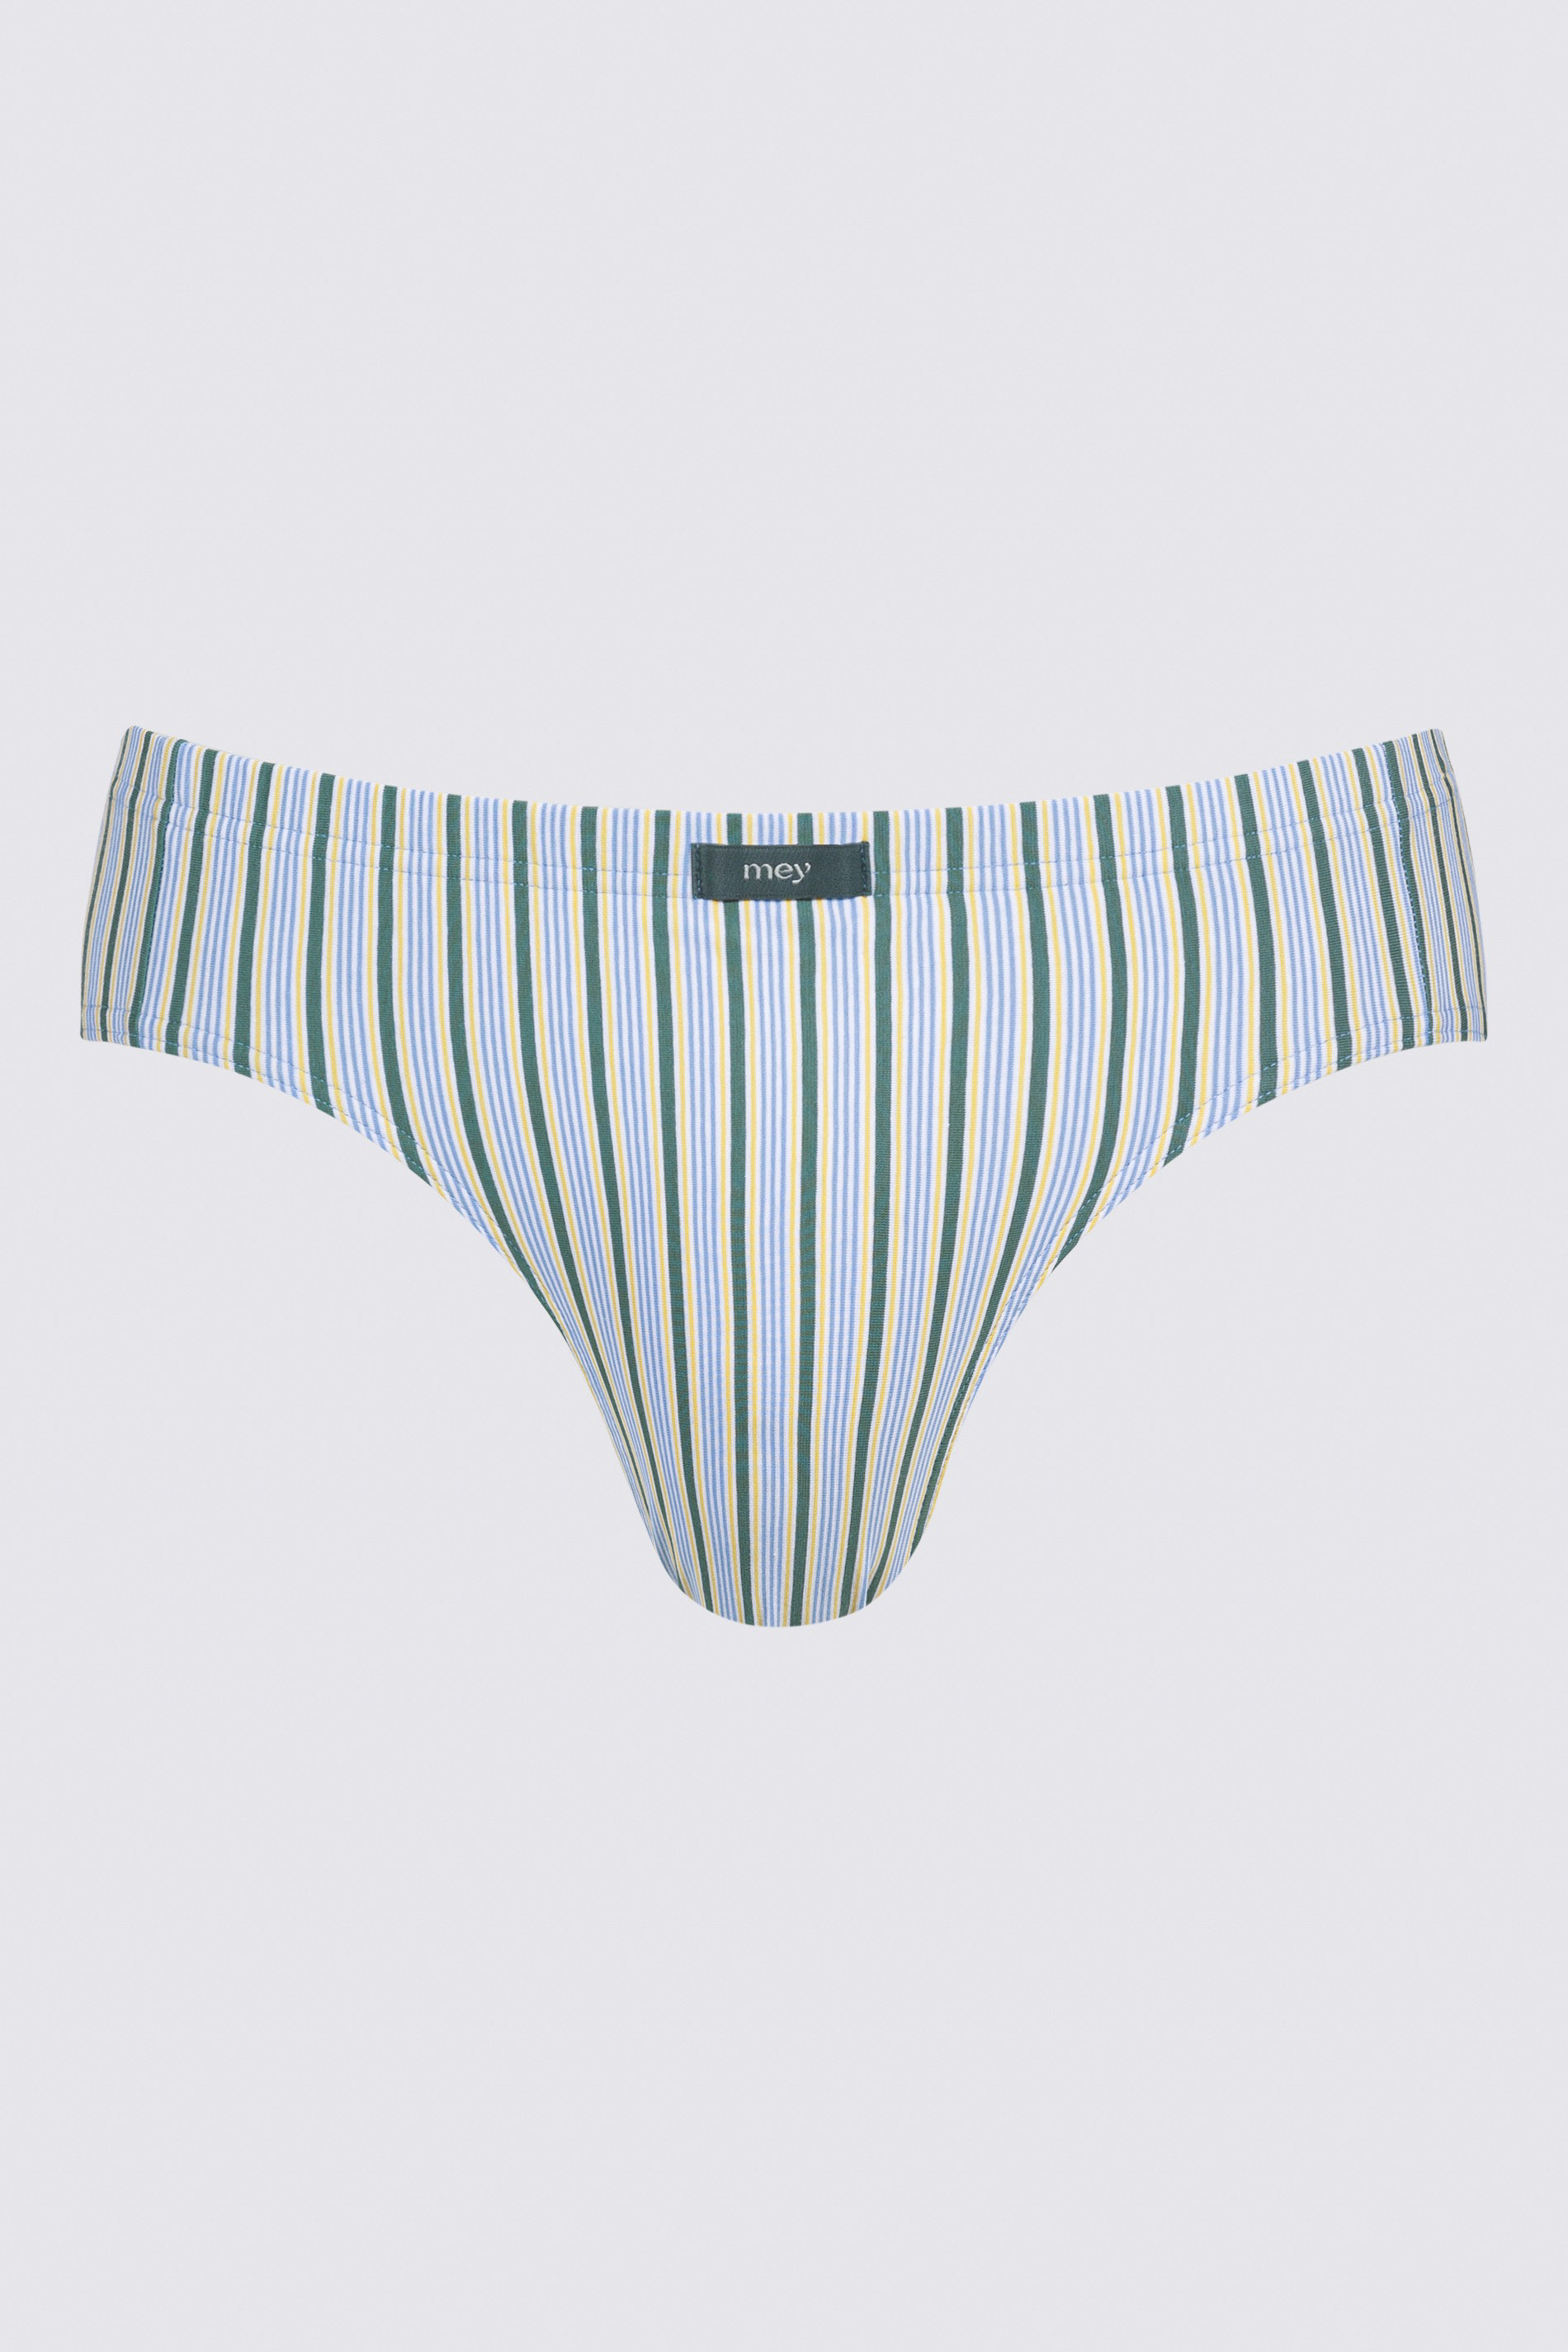 Jazz Pants Serie Coloured Stripes Freisteller | mey®